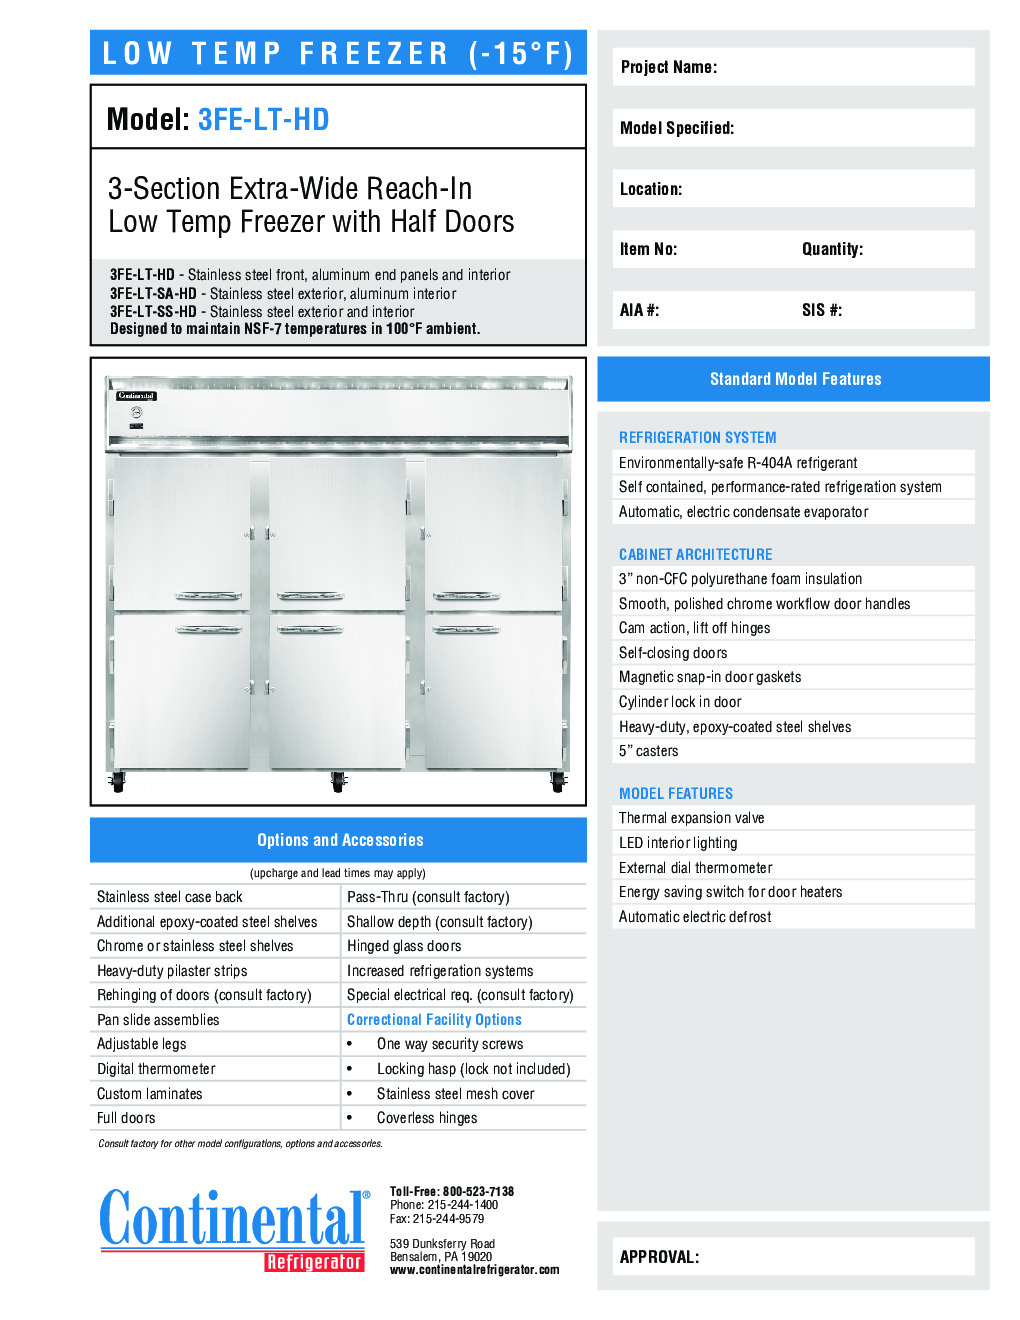 Continental Refrigerator 3FE-LT-SS-HD Reach-In Low Temperature Freezer